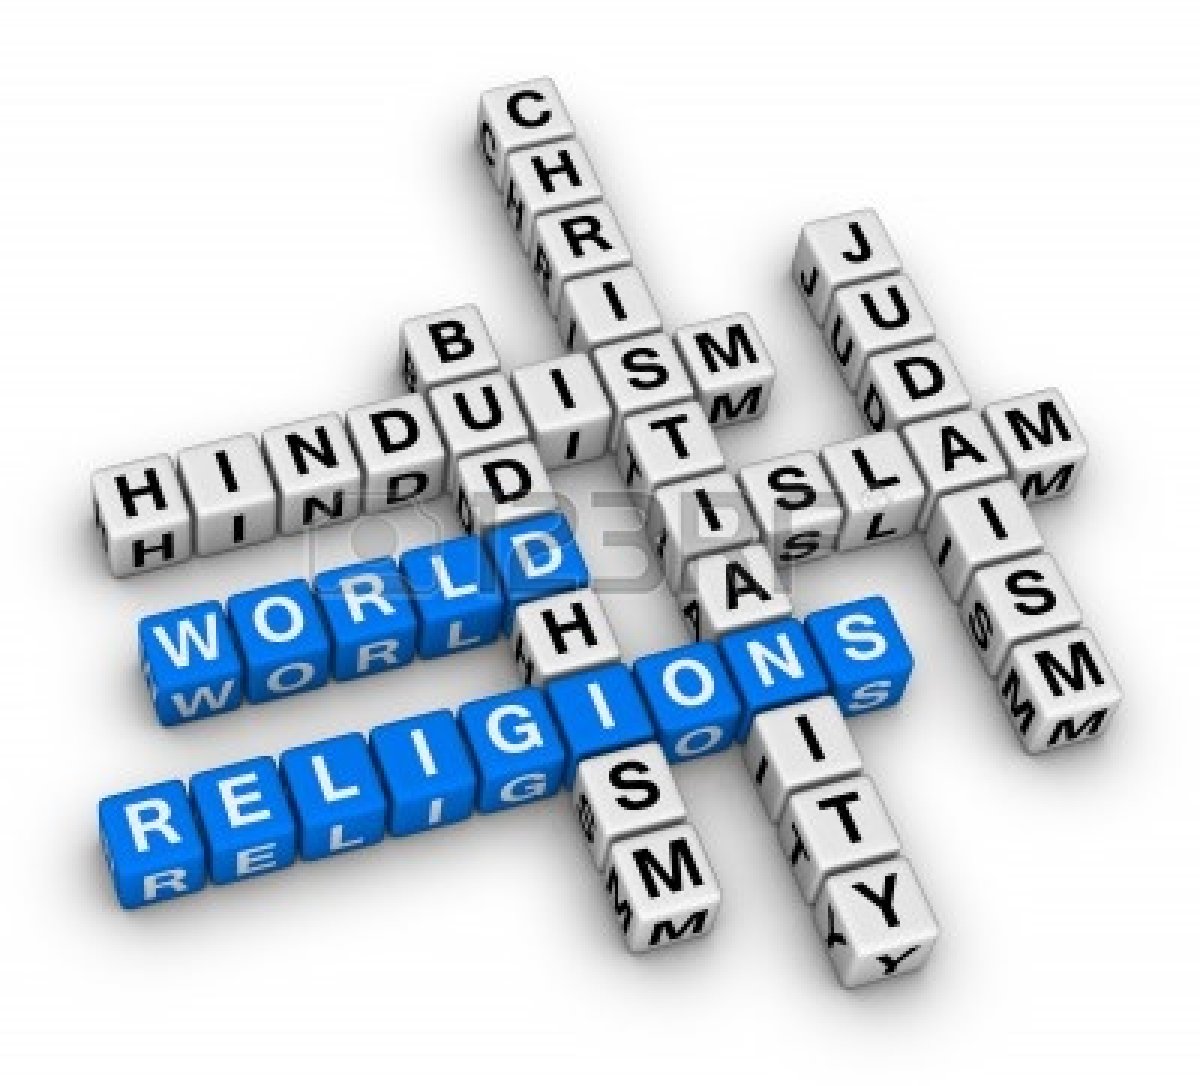 world religions